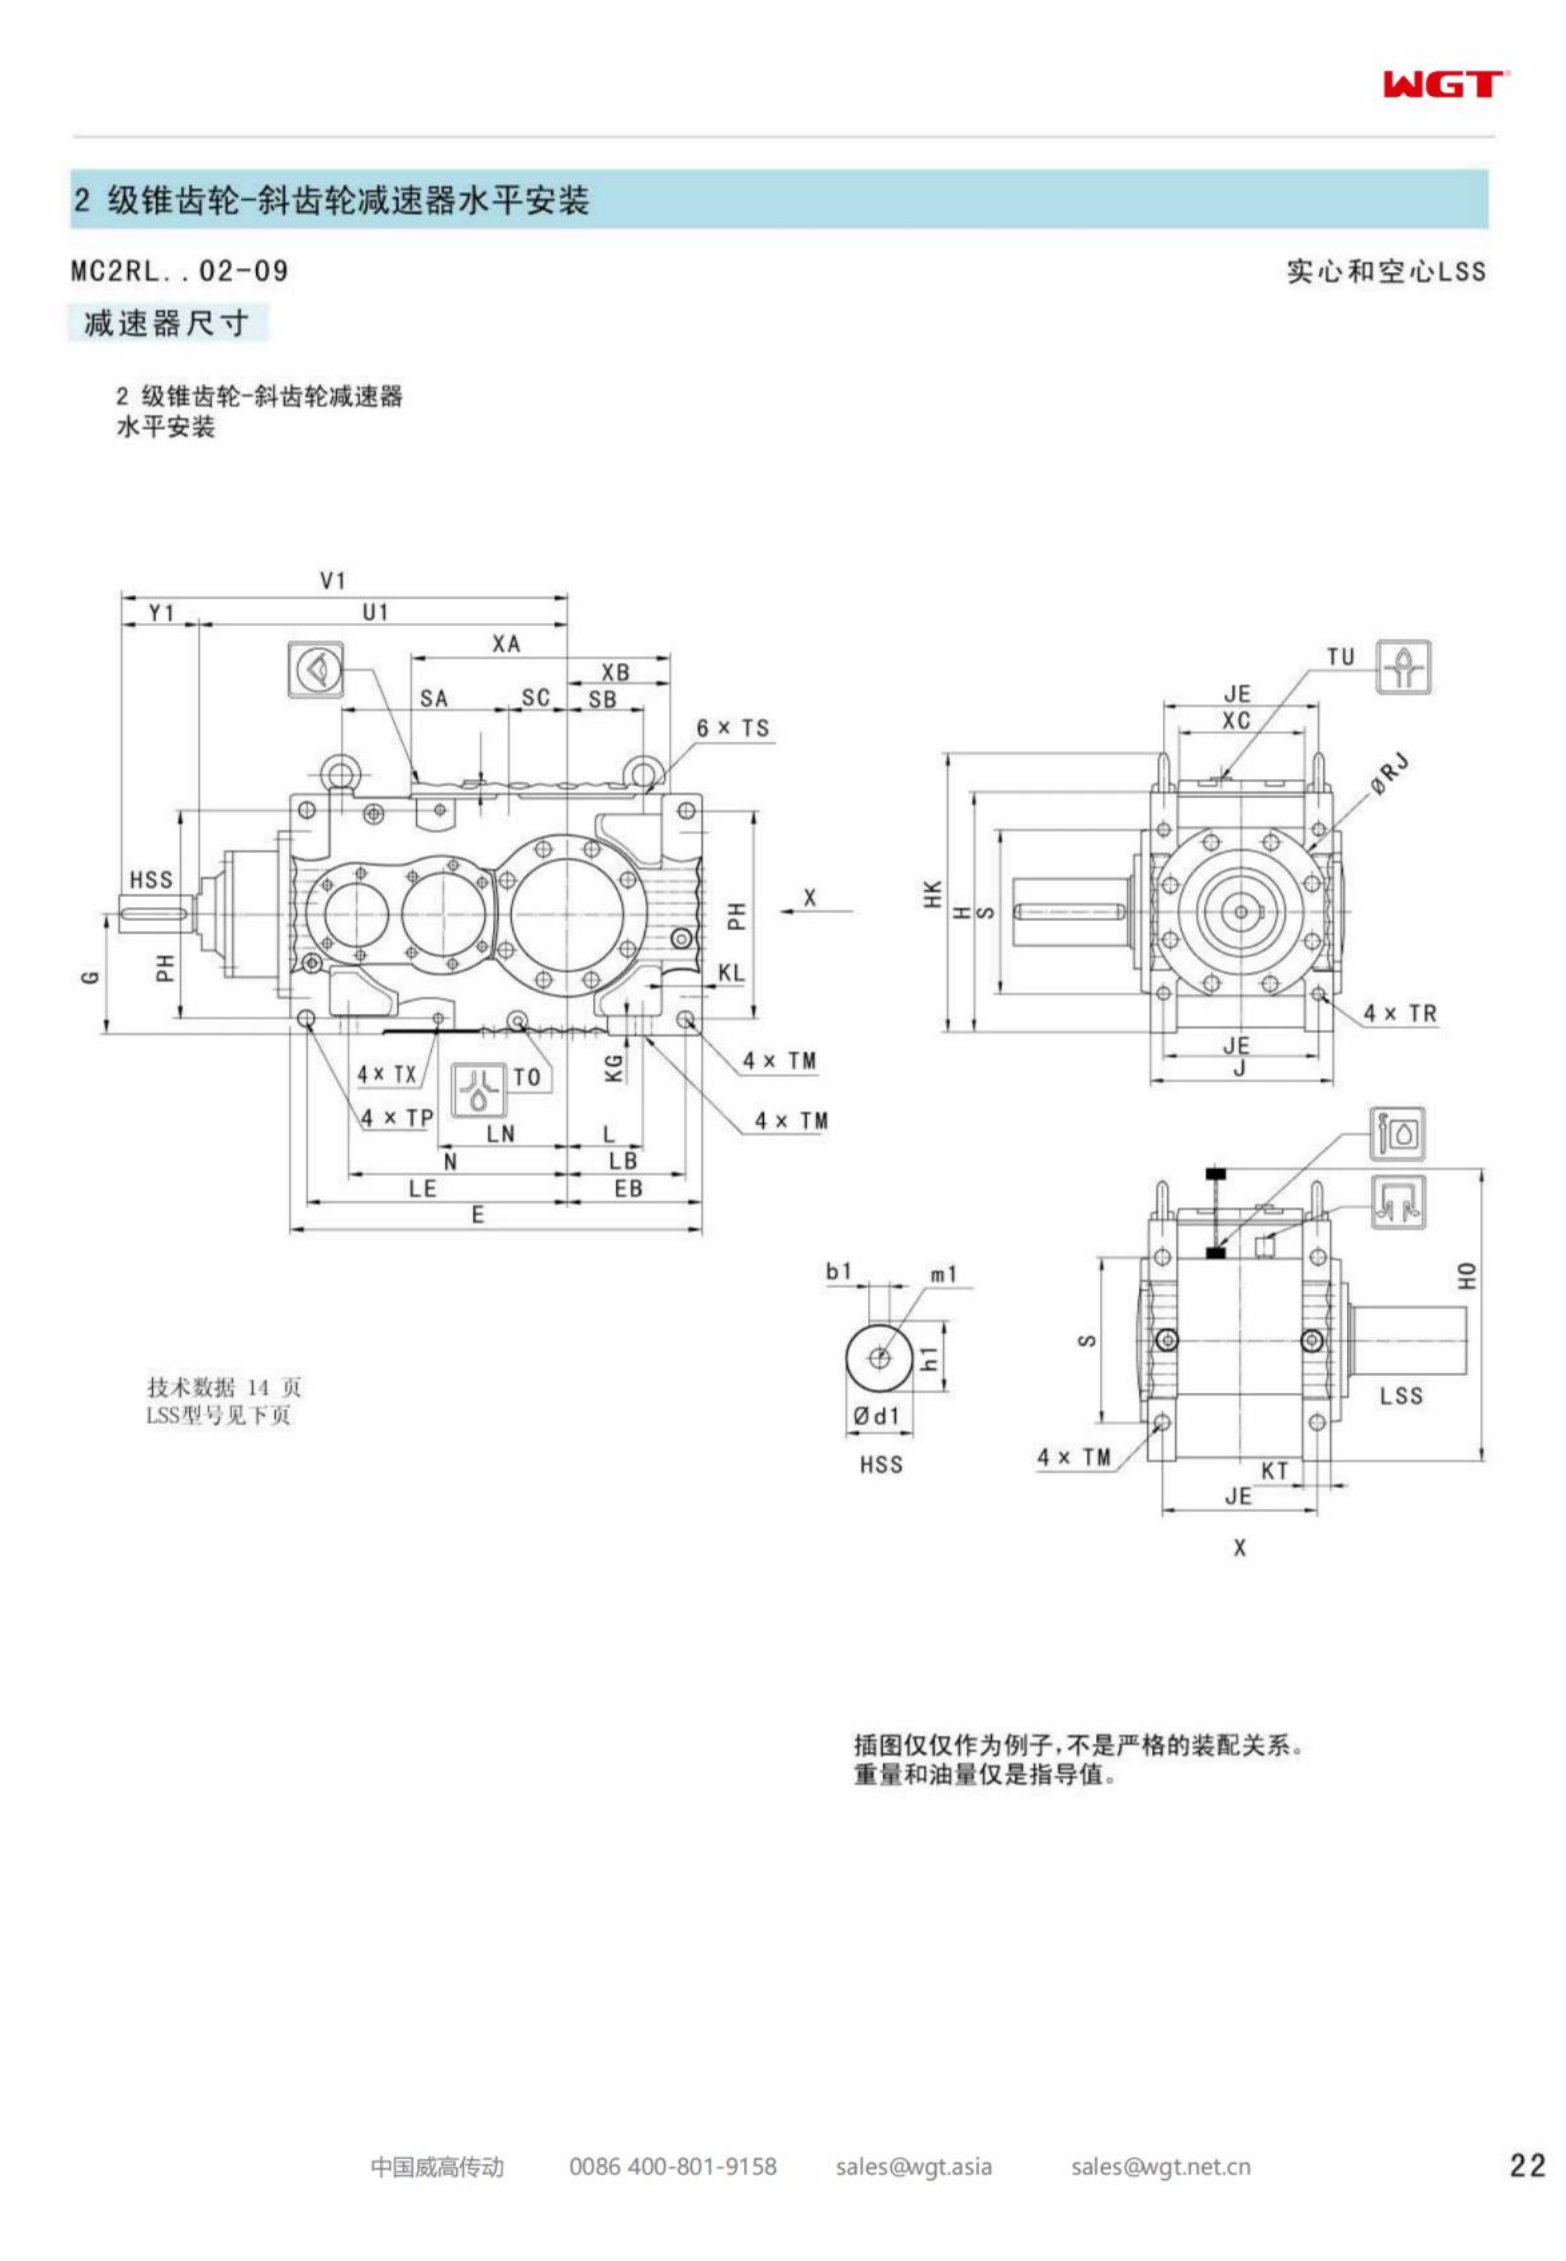 MC2RLHT07 replaces _SEW_MC_ series gearbox (patent)